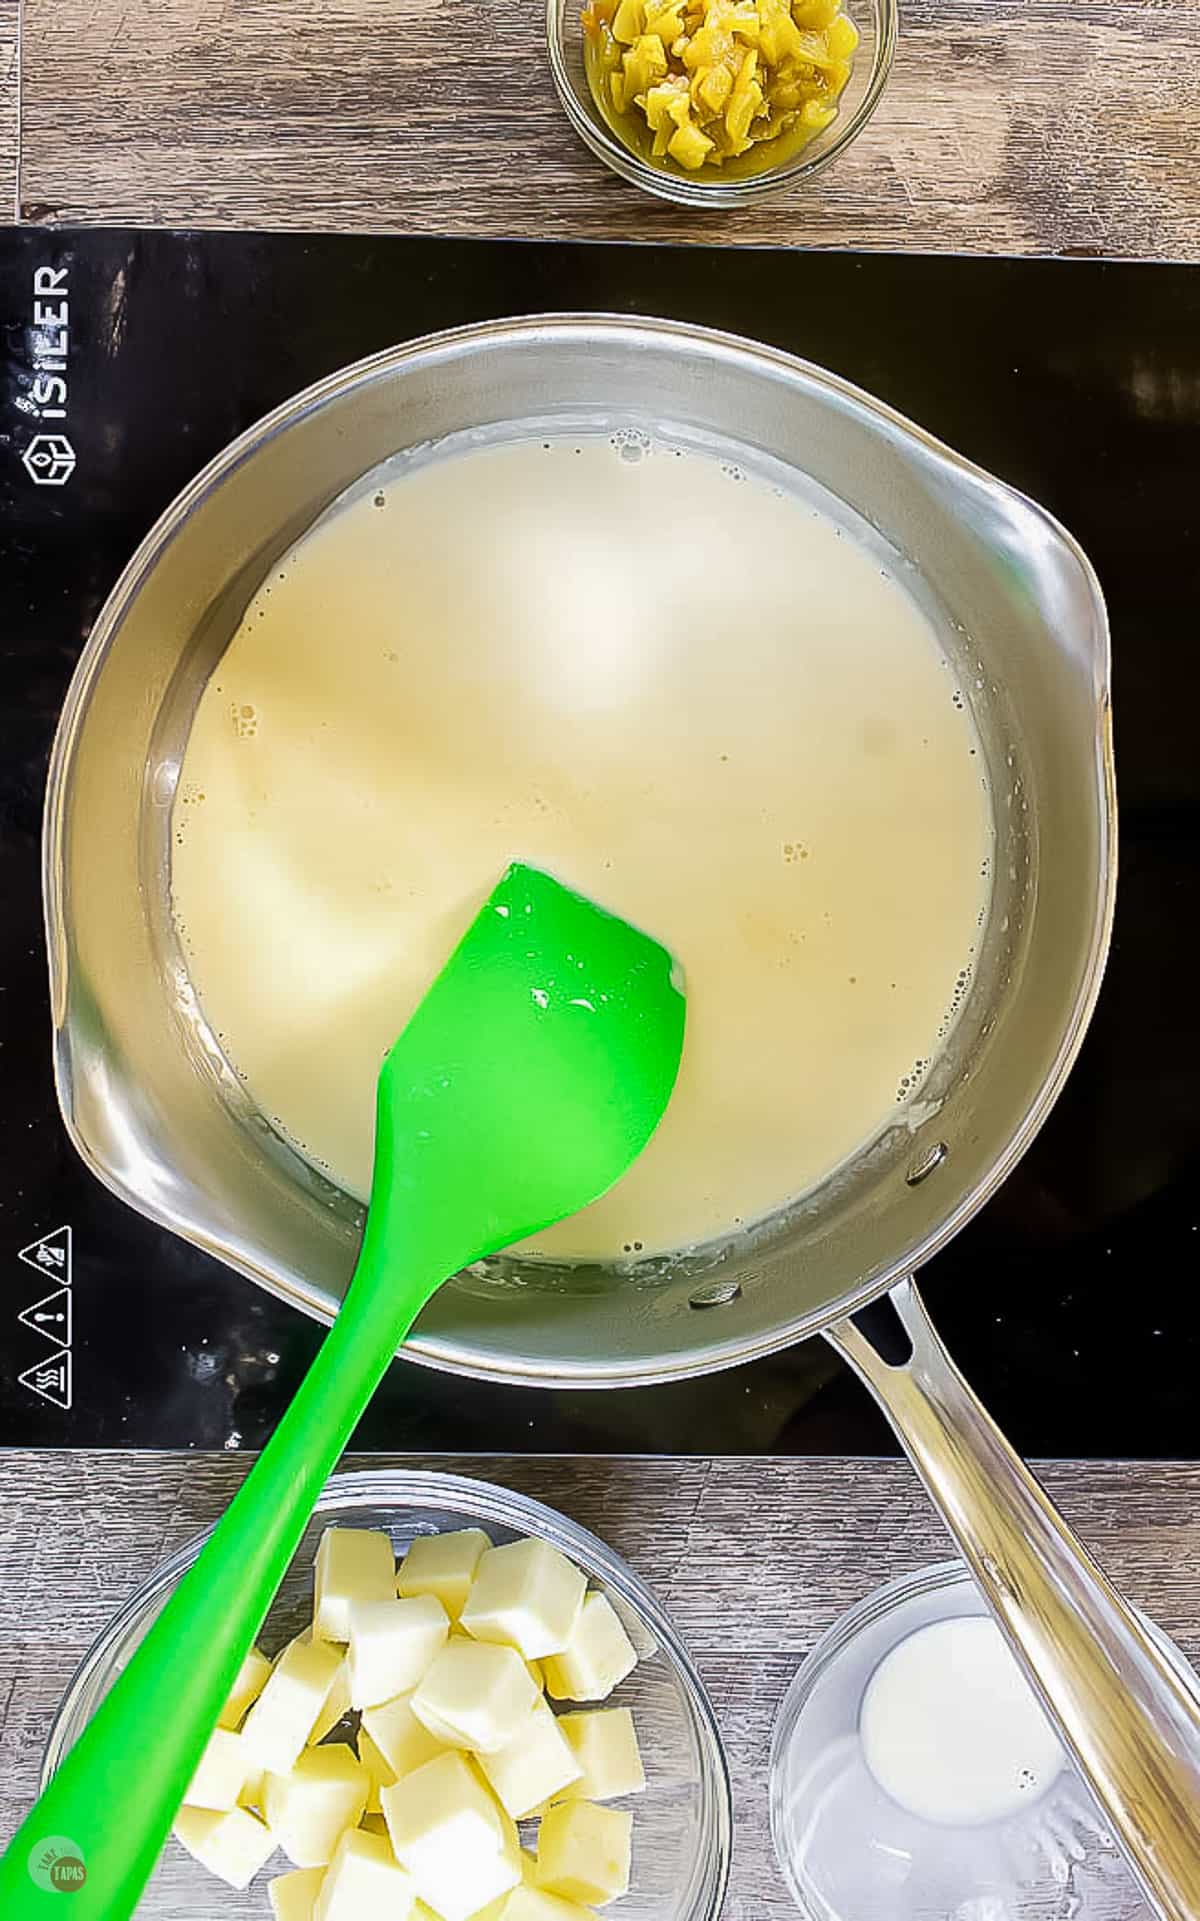 milk in a pan